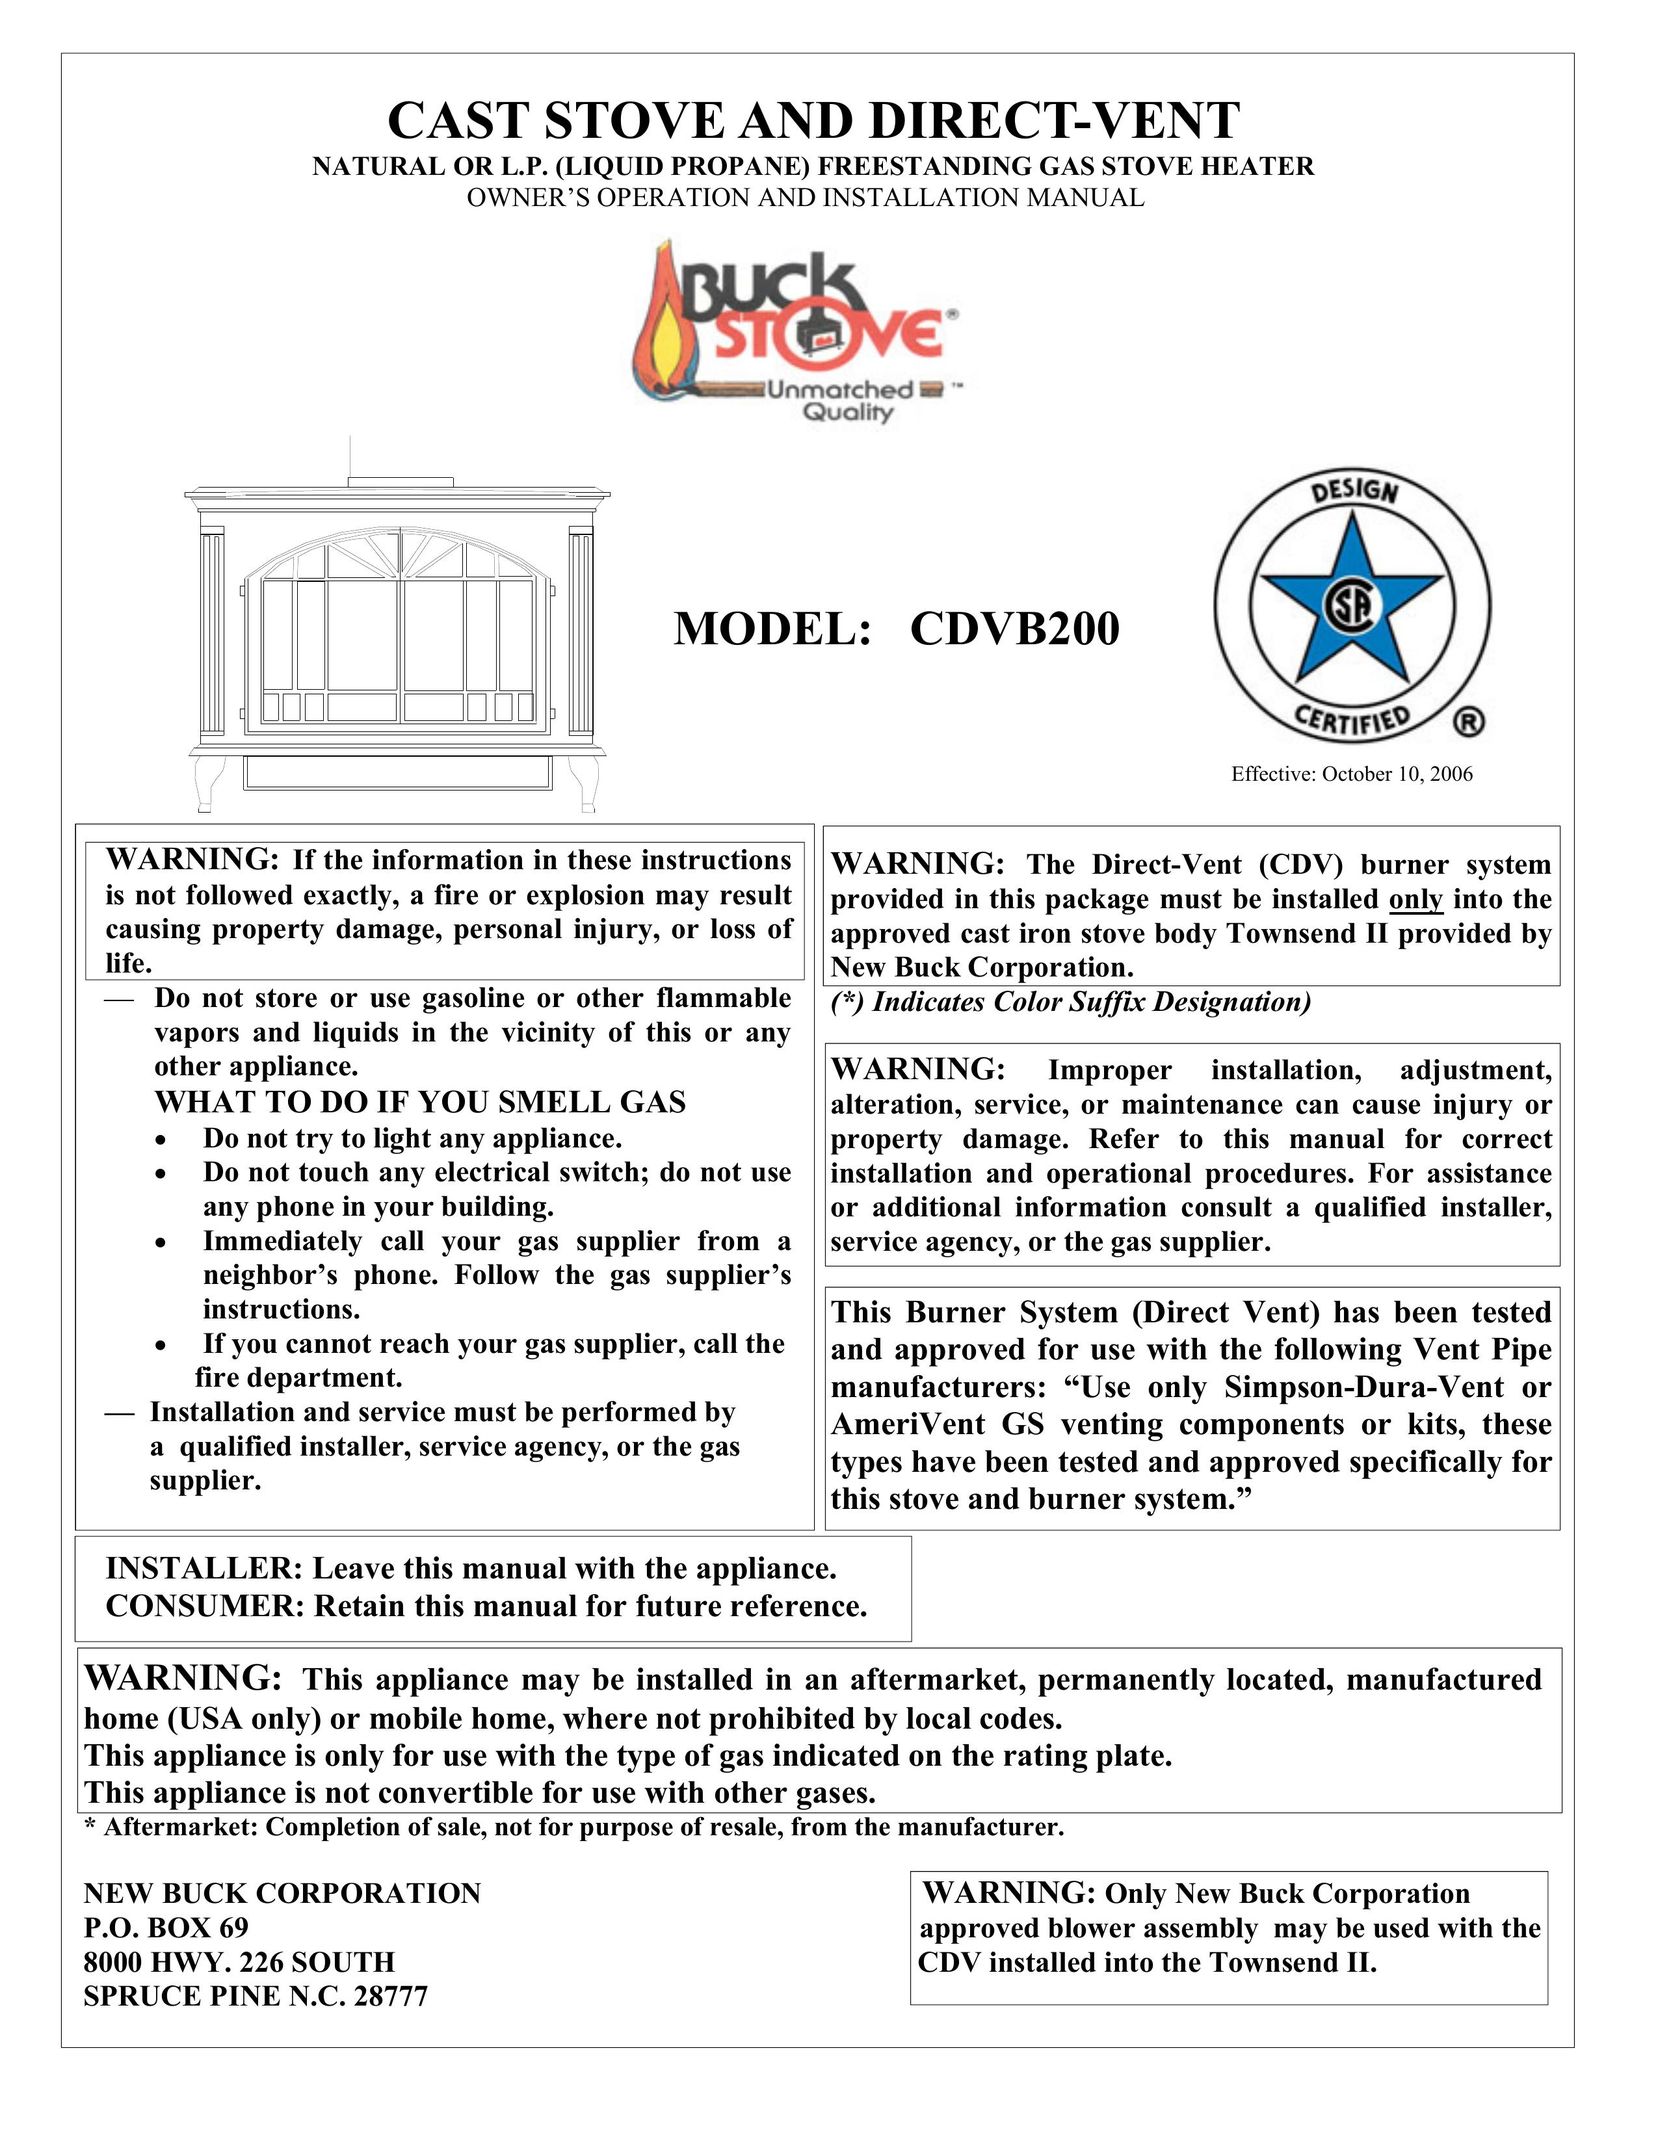 New Buck Corporation CDVB200 Stove User Manual